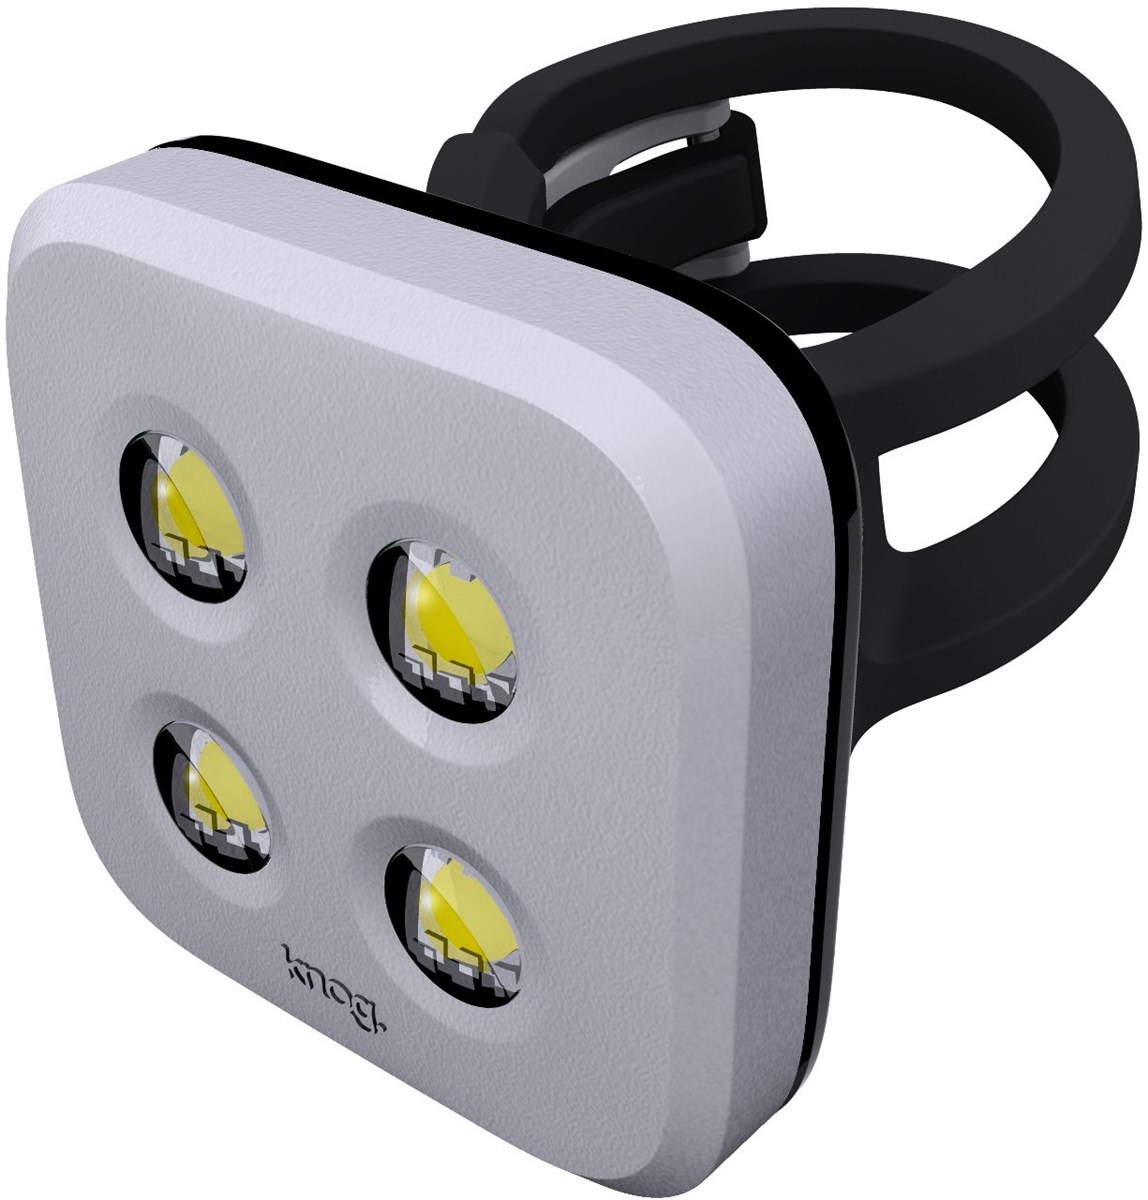 Knog Blinder 4 LED USB Rechargeable Rear Light product image